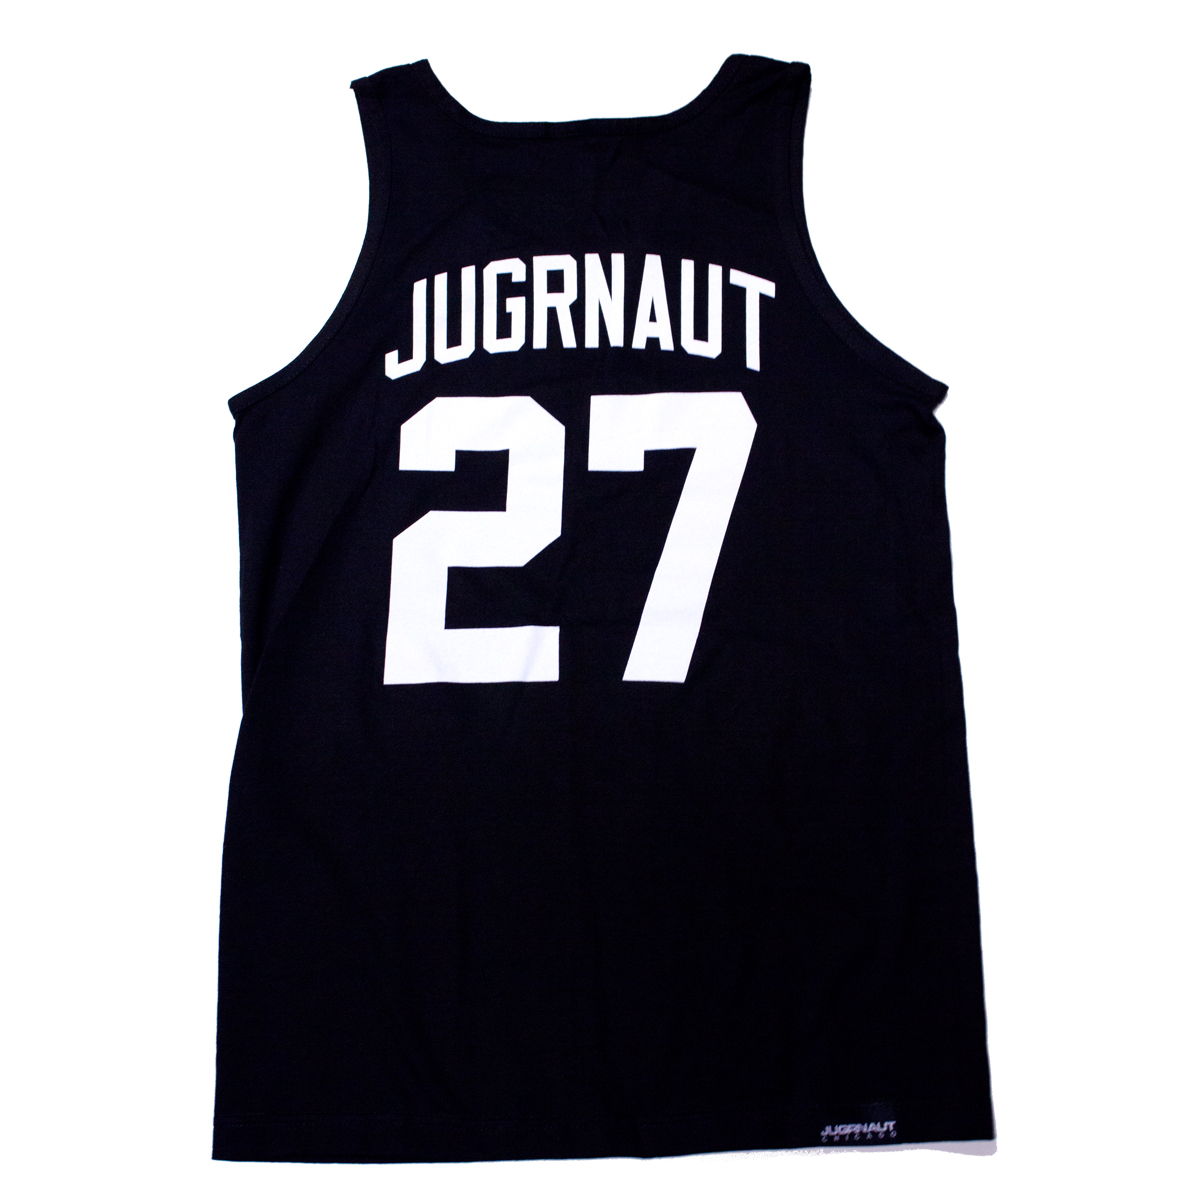 Jugrnaut_TeamTank_black_back